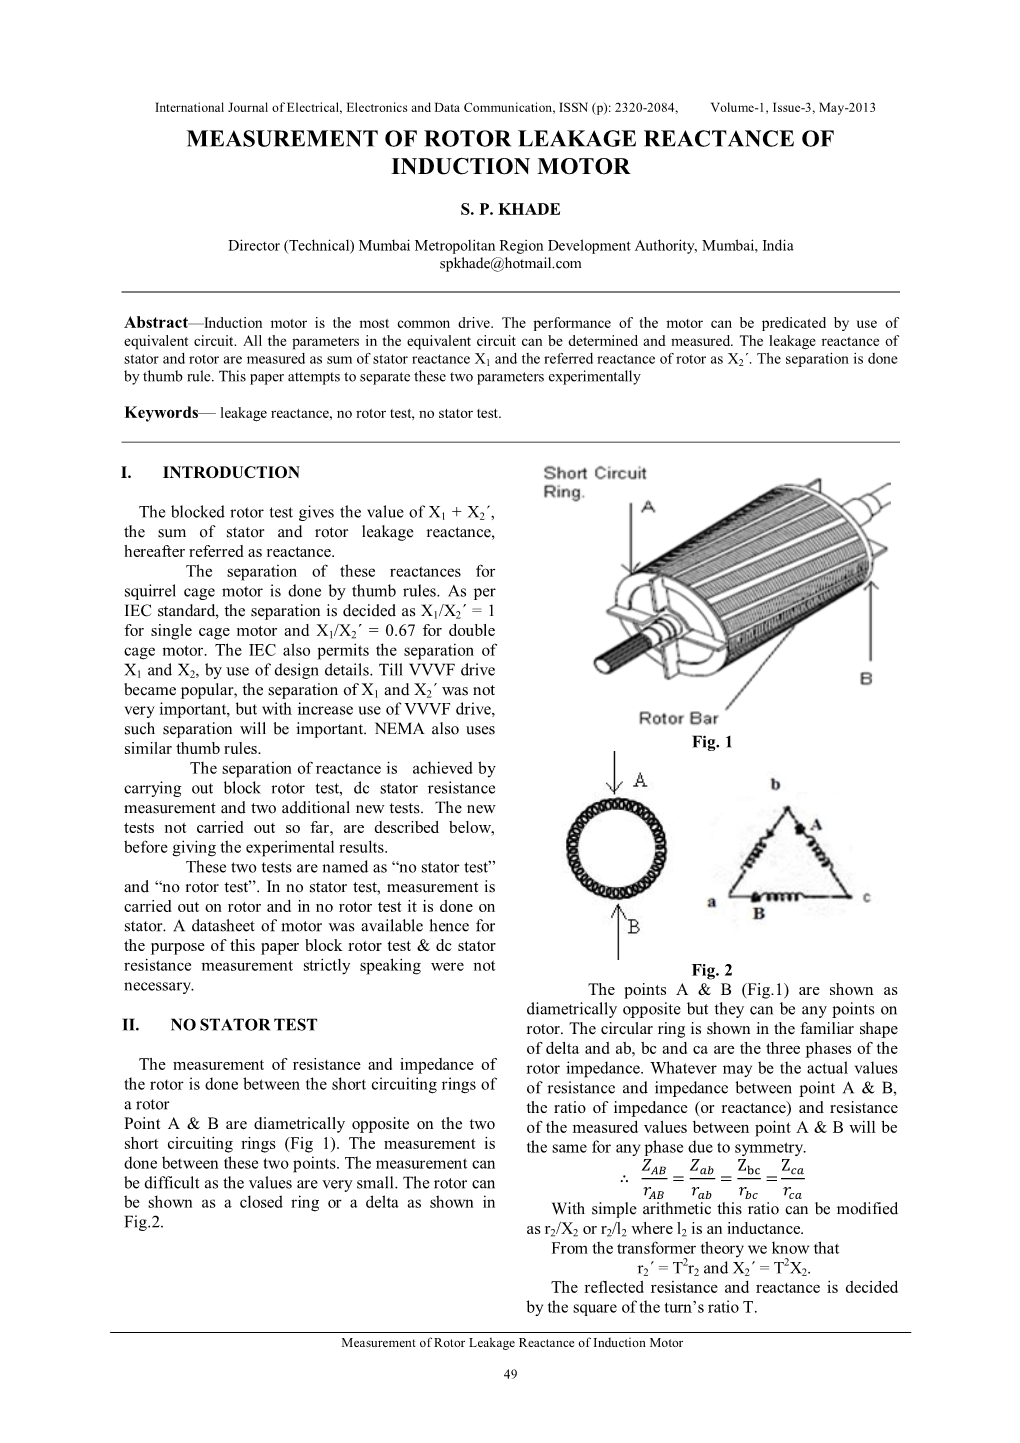 Measurement of Rotor Leakage Reactance of Induction Motor